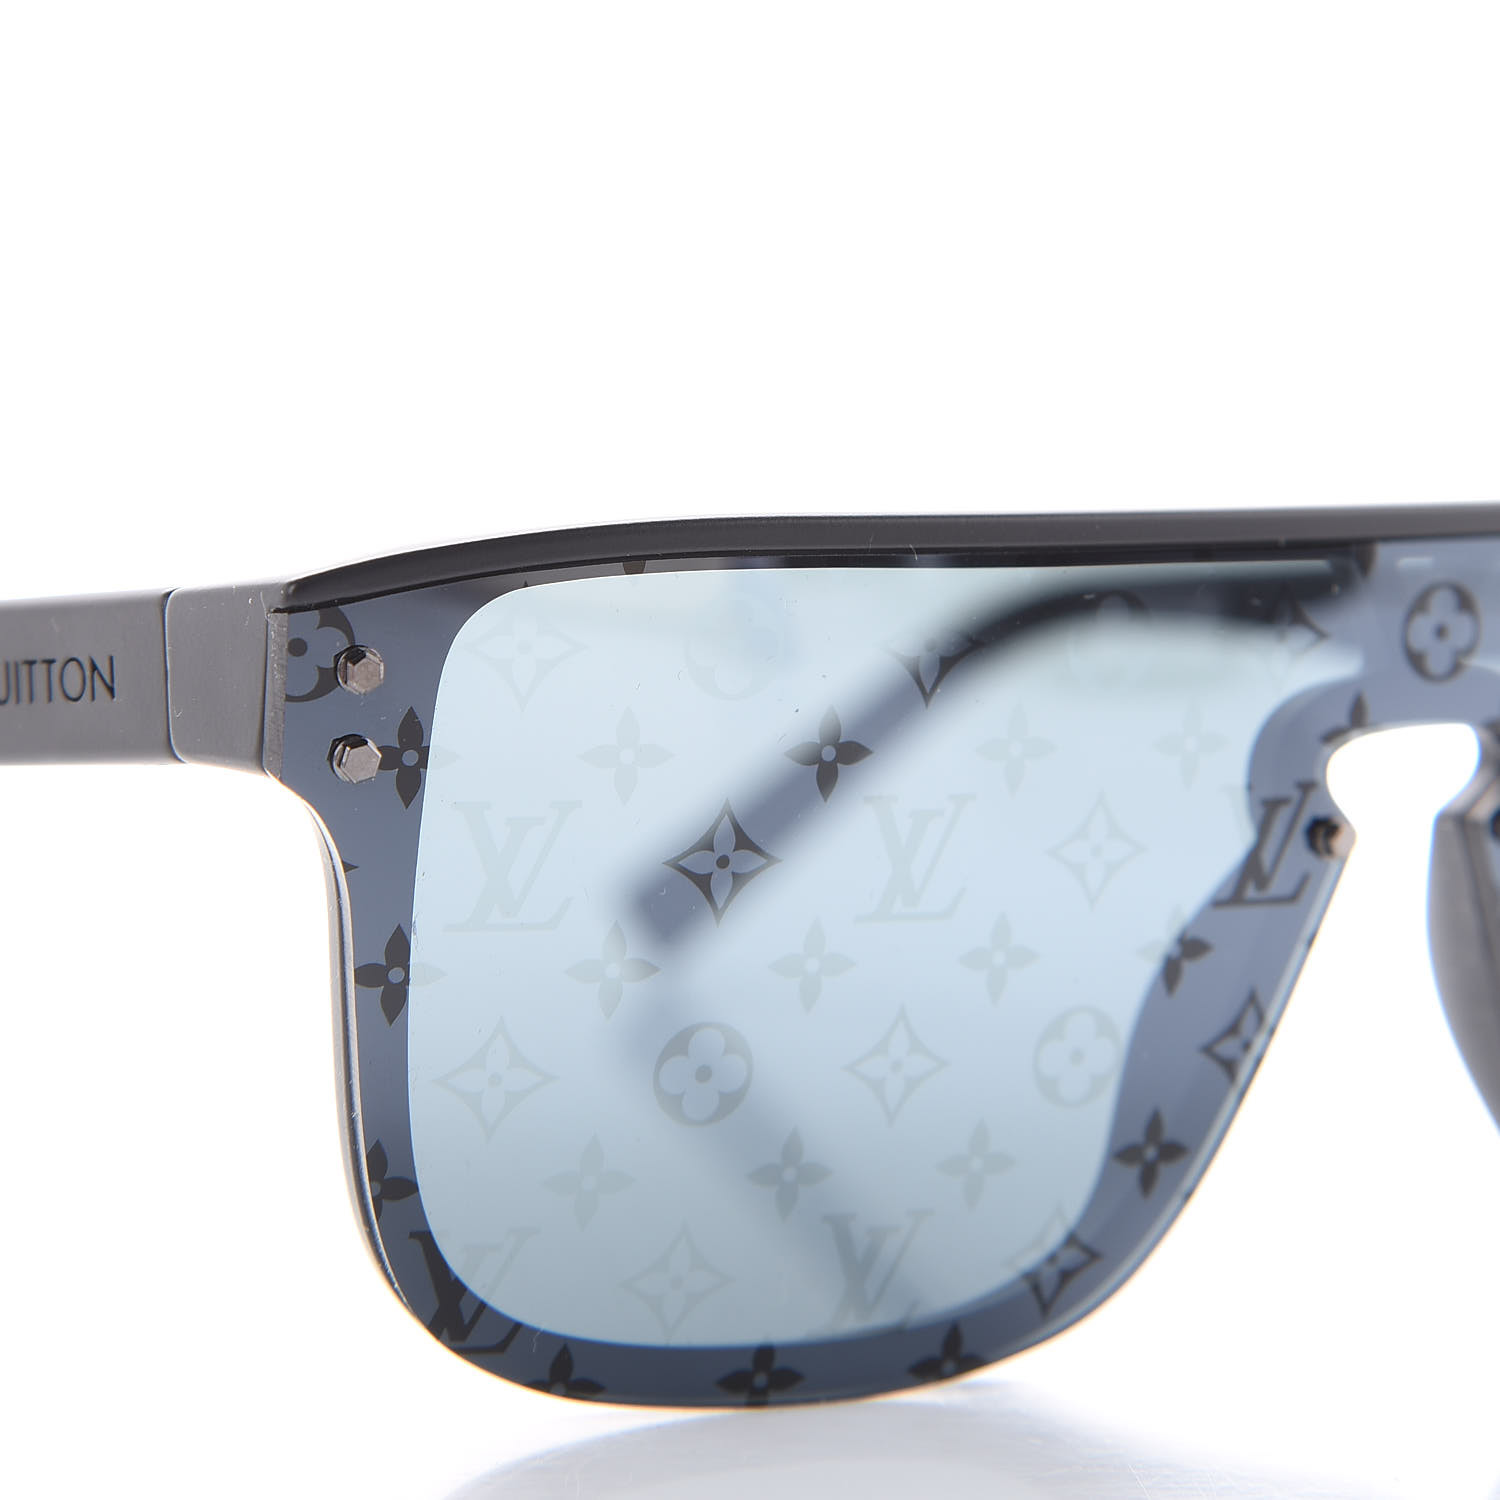 Louis Vuitton Waimea Sunglasses Priceline Flights